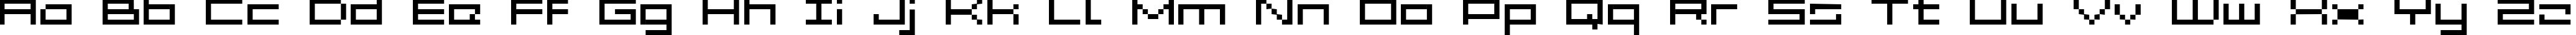 Пример написания английского алфавита шрифтом Grixel Acme 5 Wide